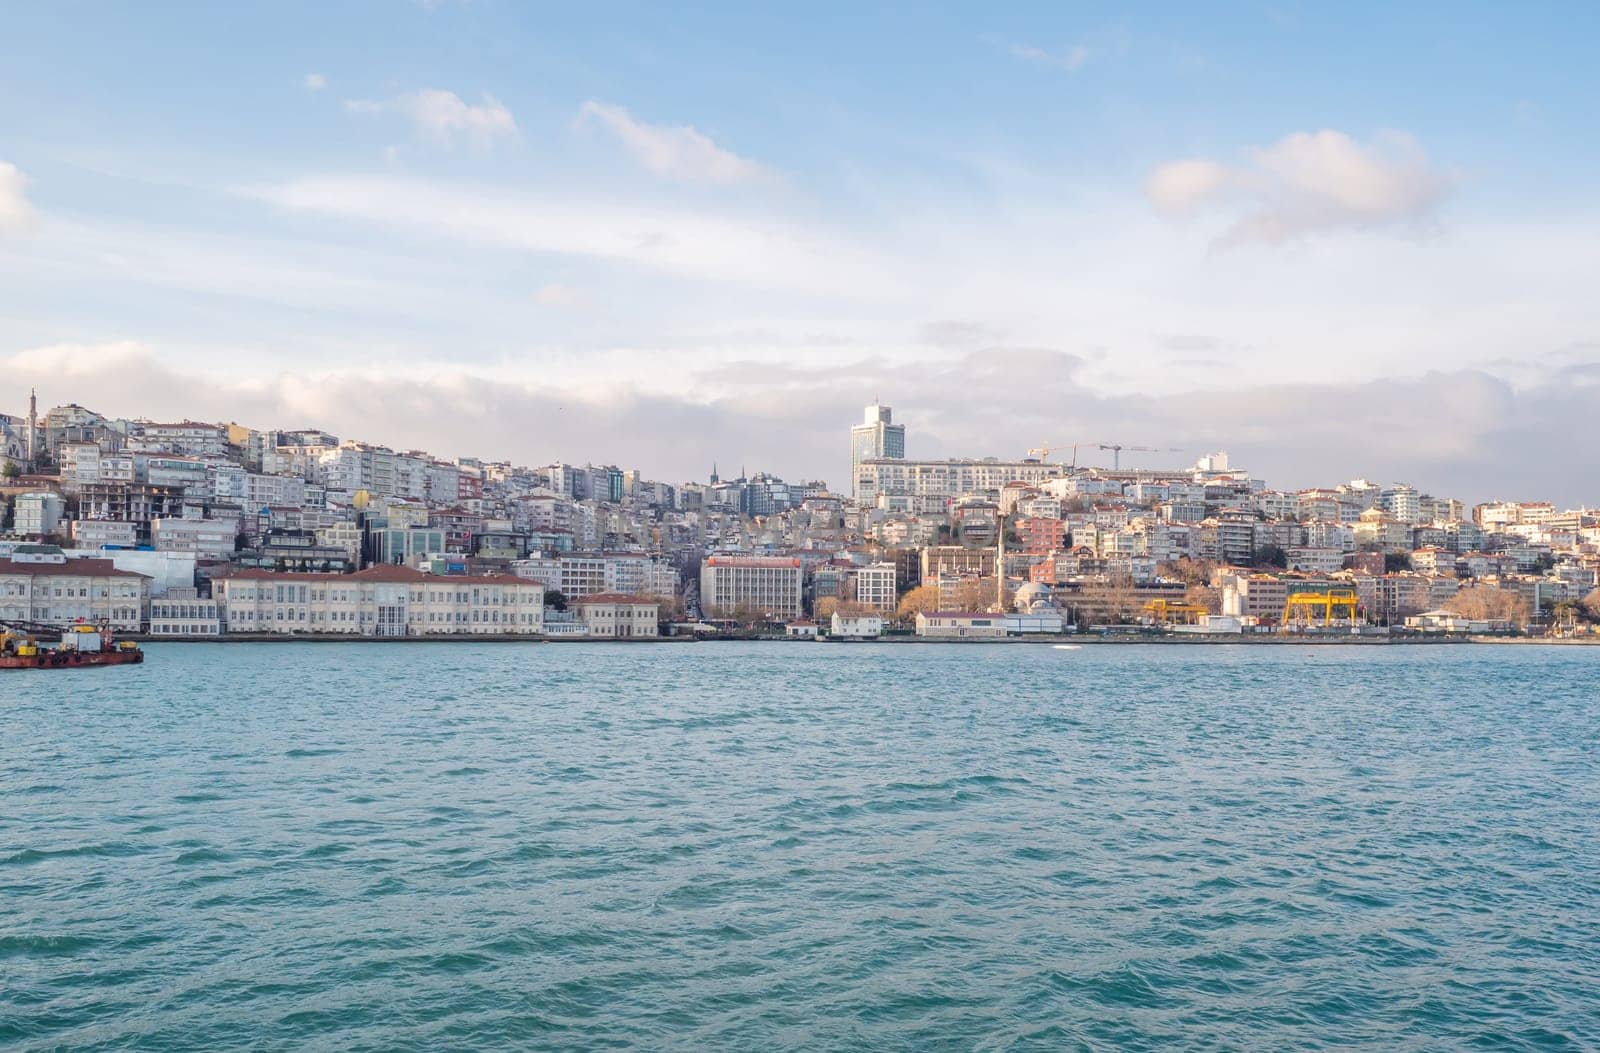 Bosphorus Strait in the city of Istanbul. Turkey. by DovidPro